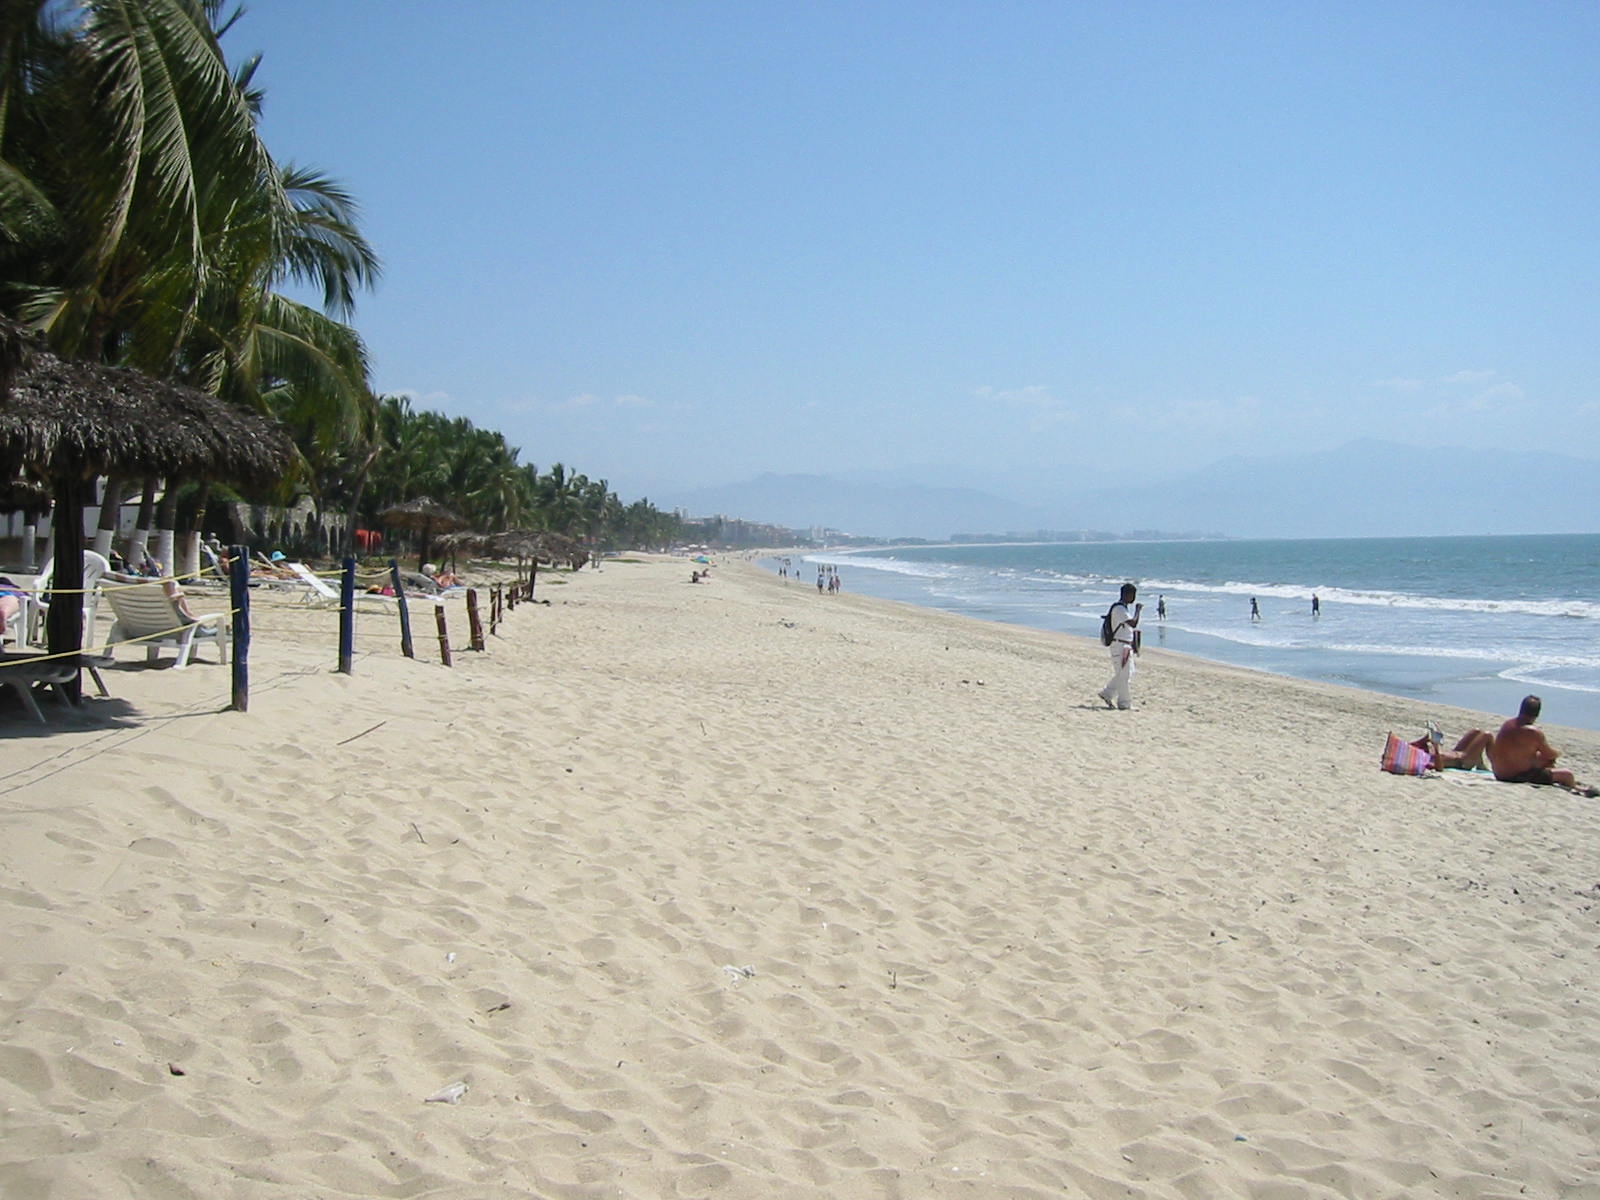 Bucerias - sandy beach